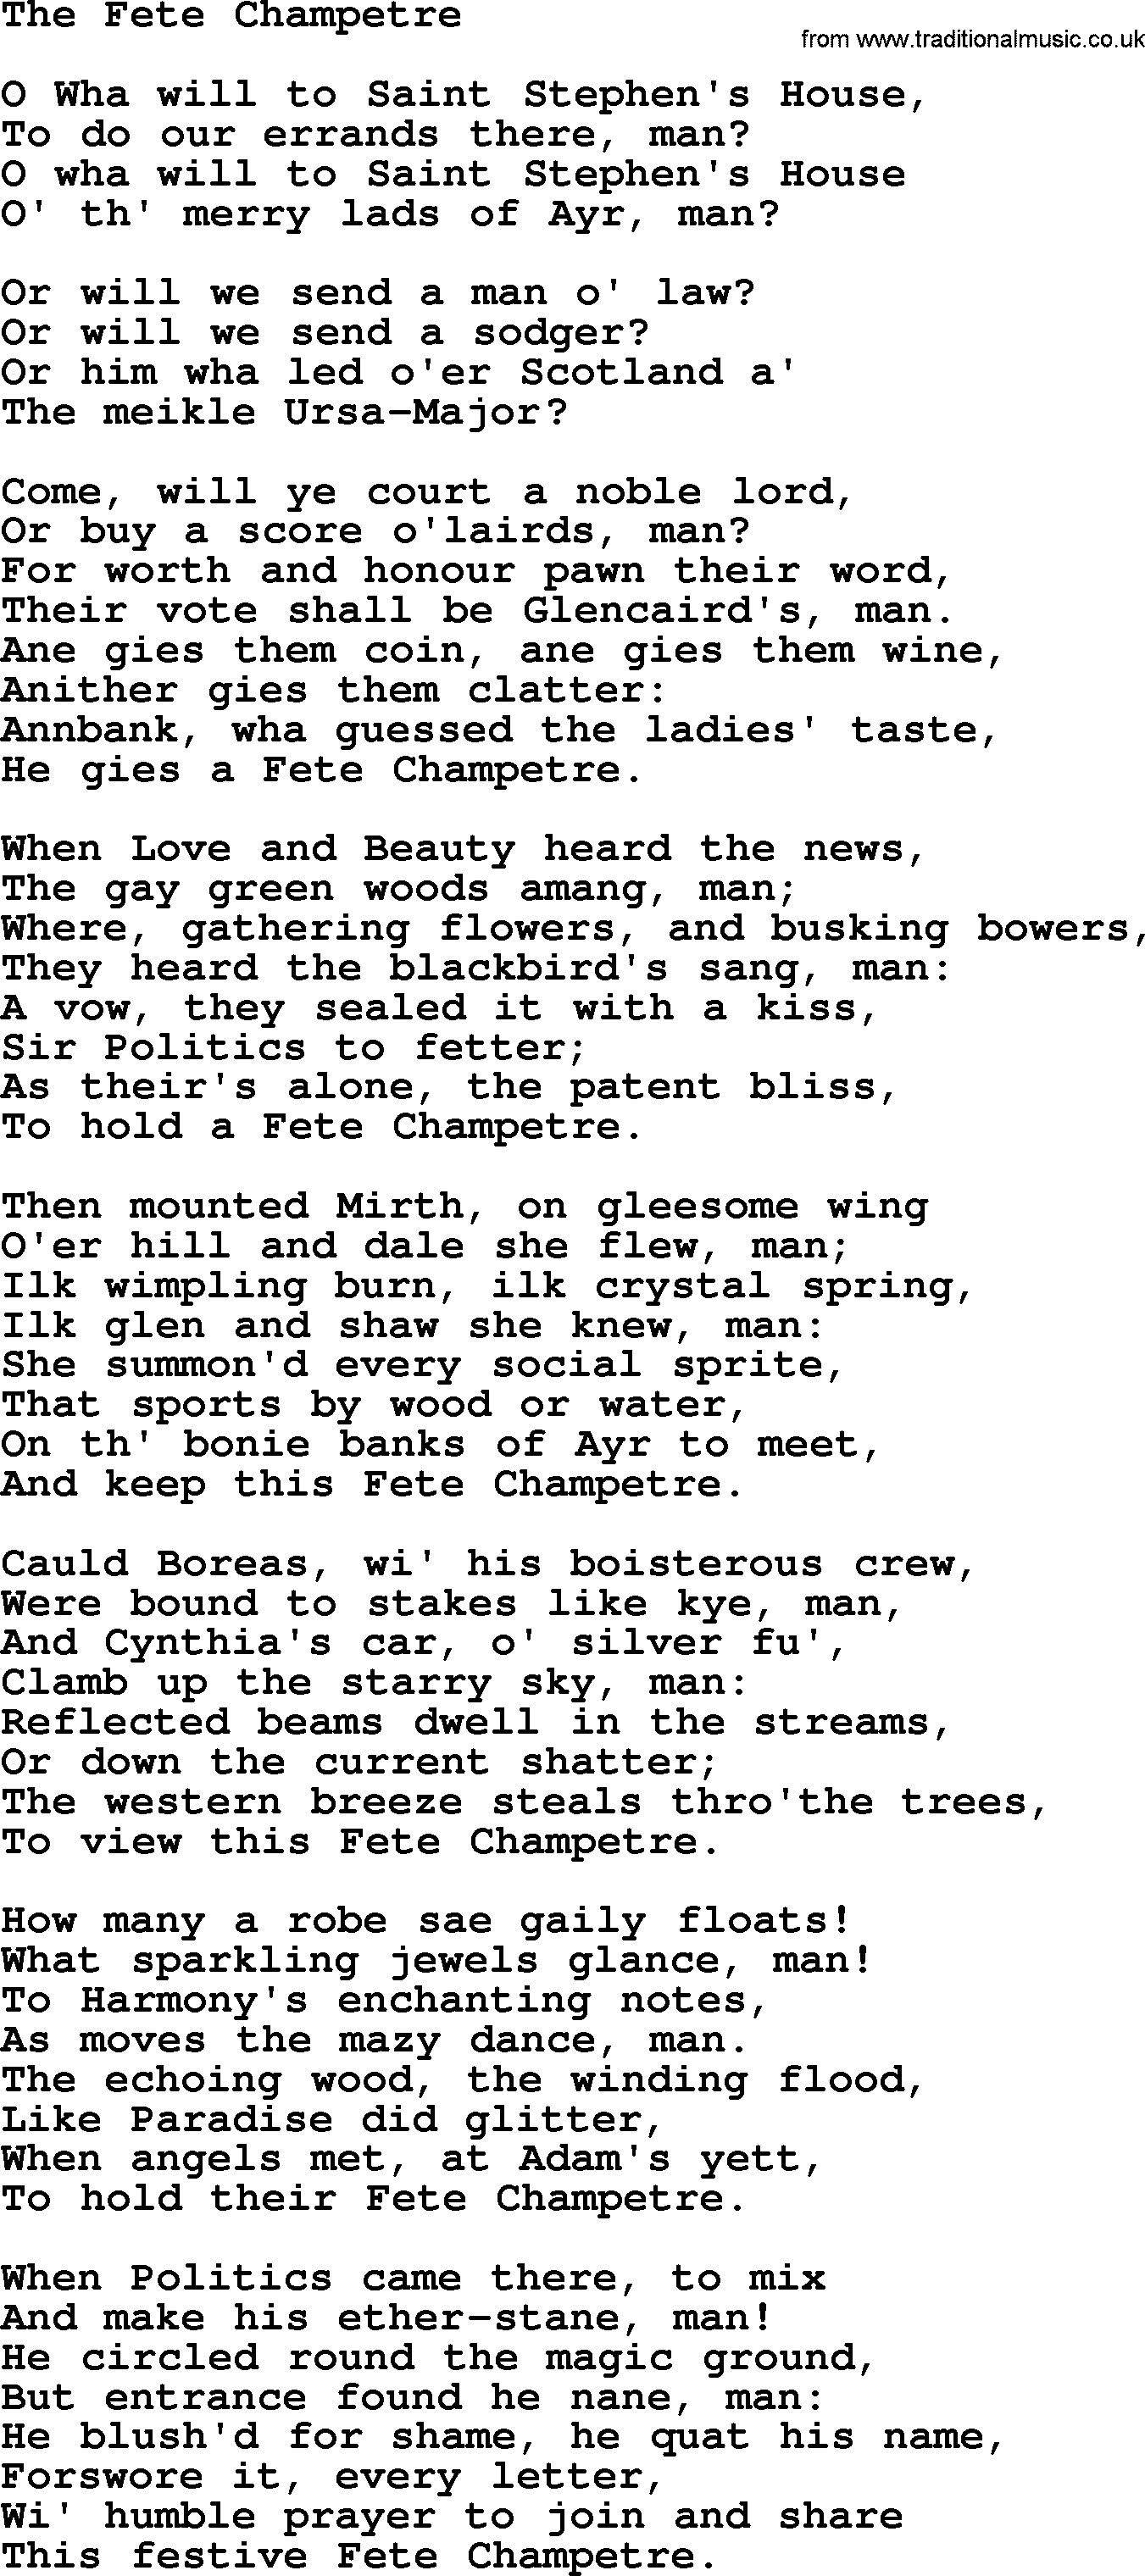 Robert Burns Songs & Lyrics: The Fete Champetre